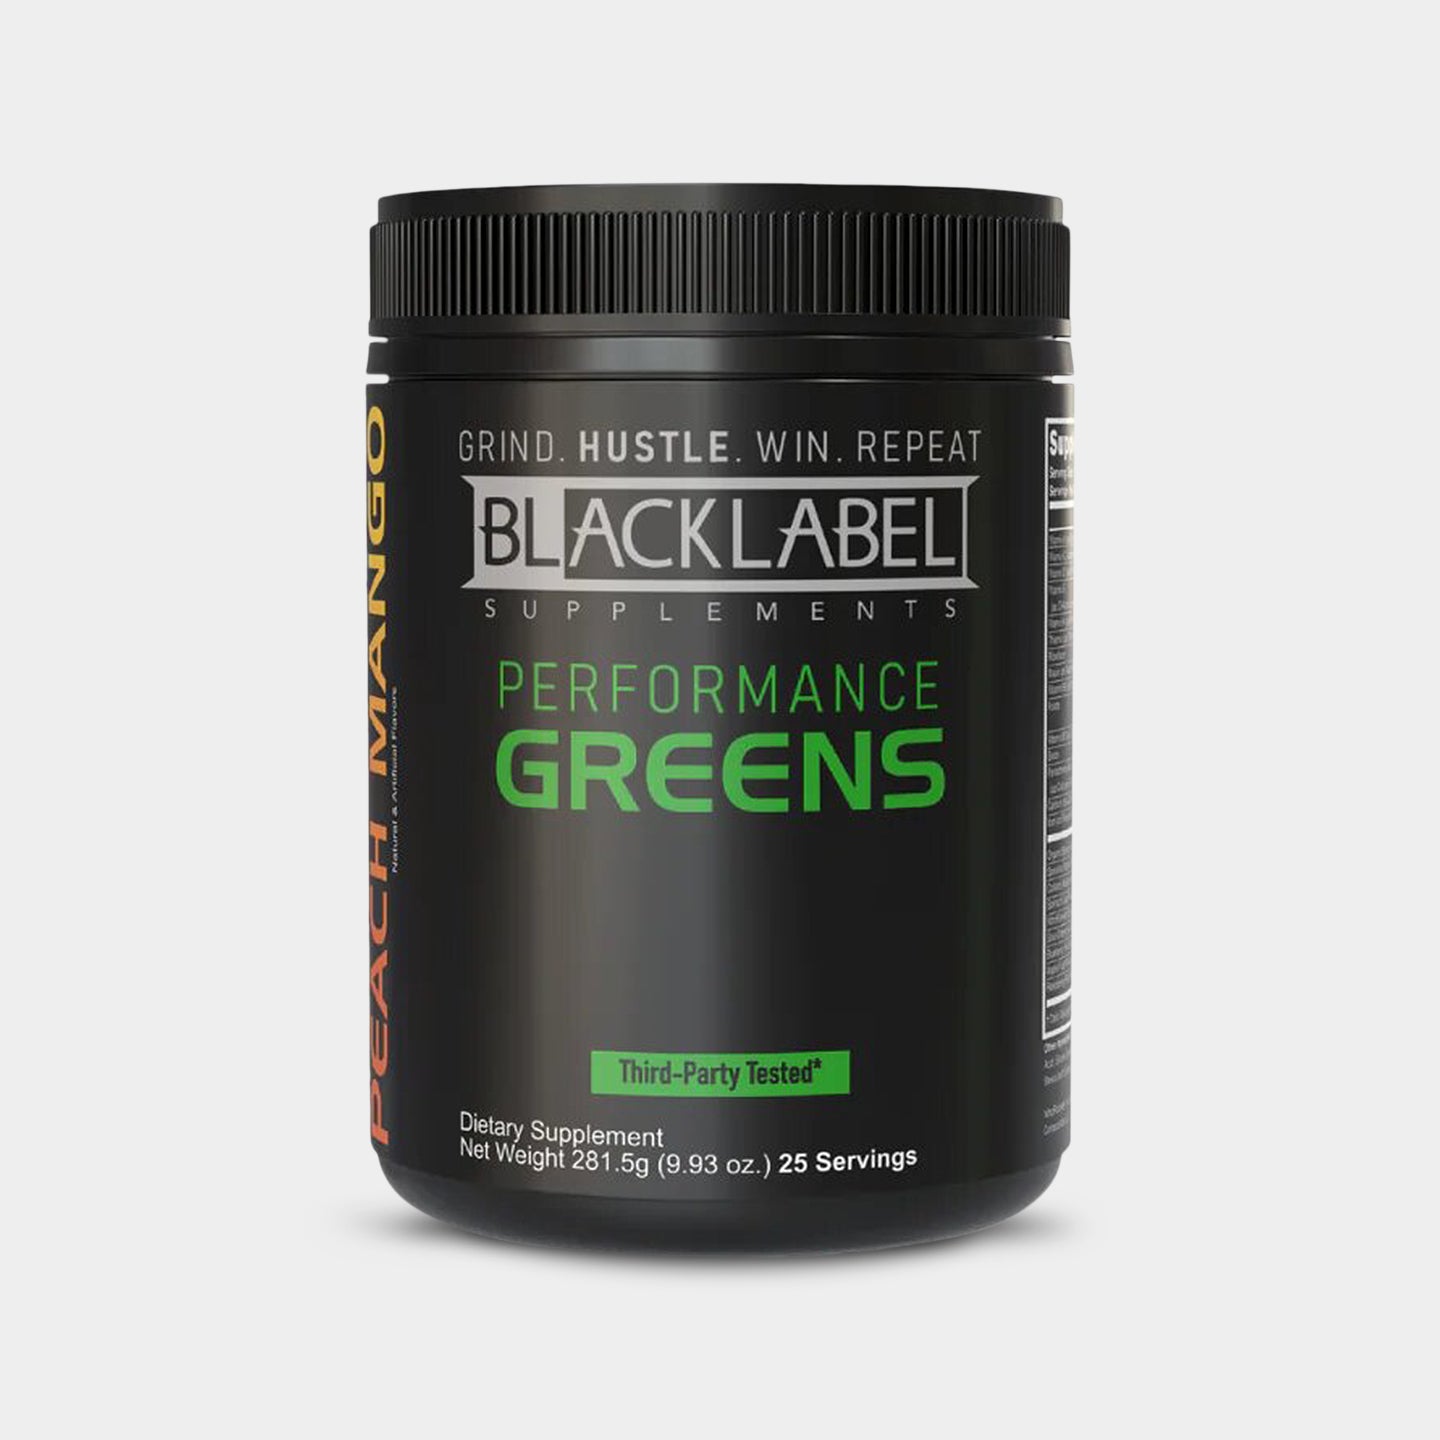 BLACKLABEL Supplements Performance Greens